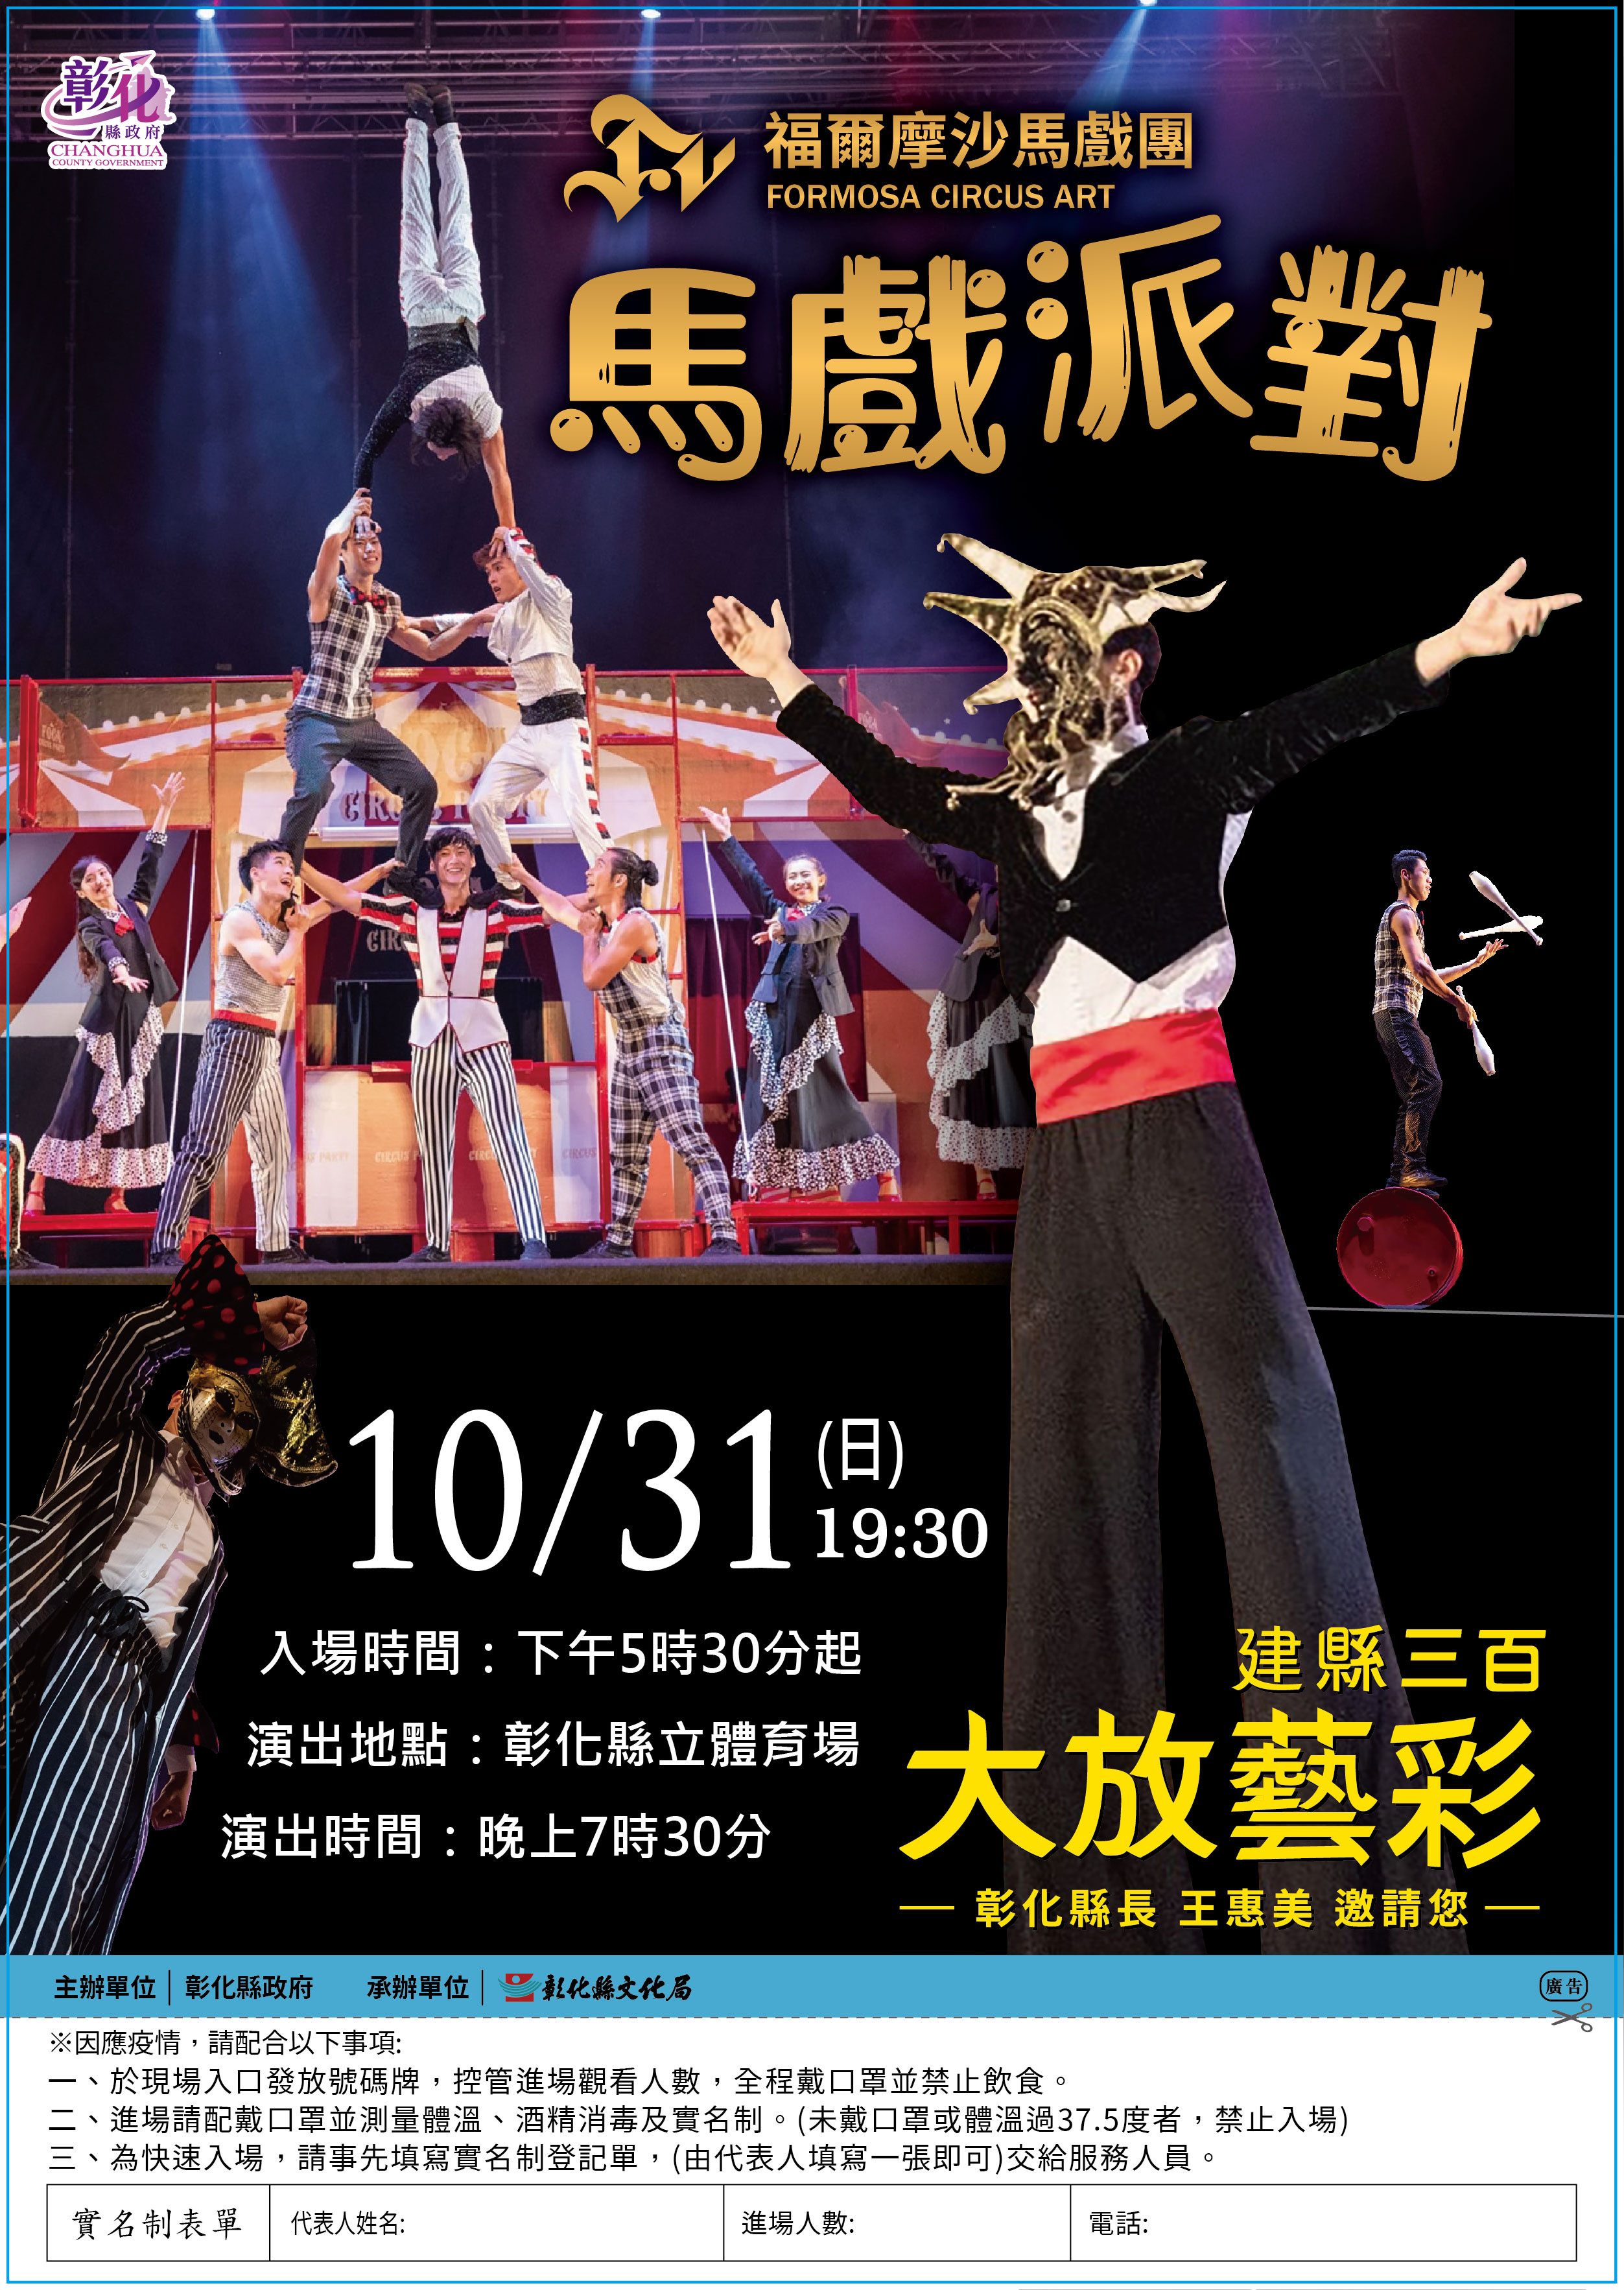 FOCA福爾摩沙馬戲團是臺灣第一個專業馬戲團隊，自2011年成立至今，不但是第一個登上愛丁堡藝穗節和外亞維儂藝術節的臺灣馬戲團，也是首個進行海外巡迴的臺灣馬戲團，受到廣大海外觀眾的喜愛。